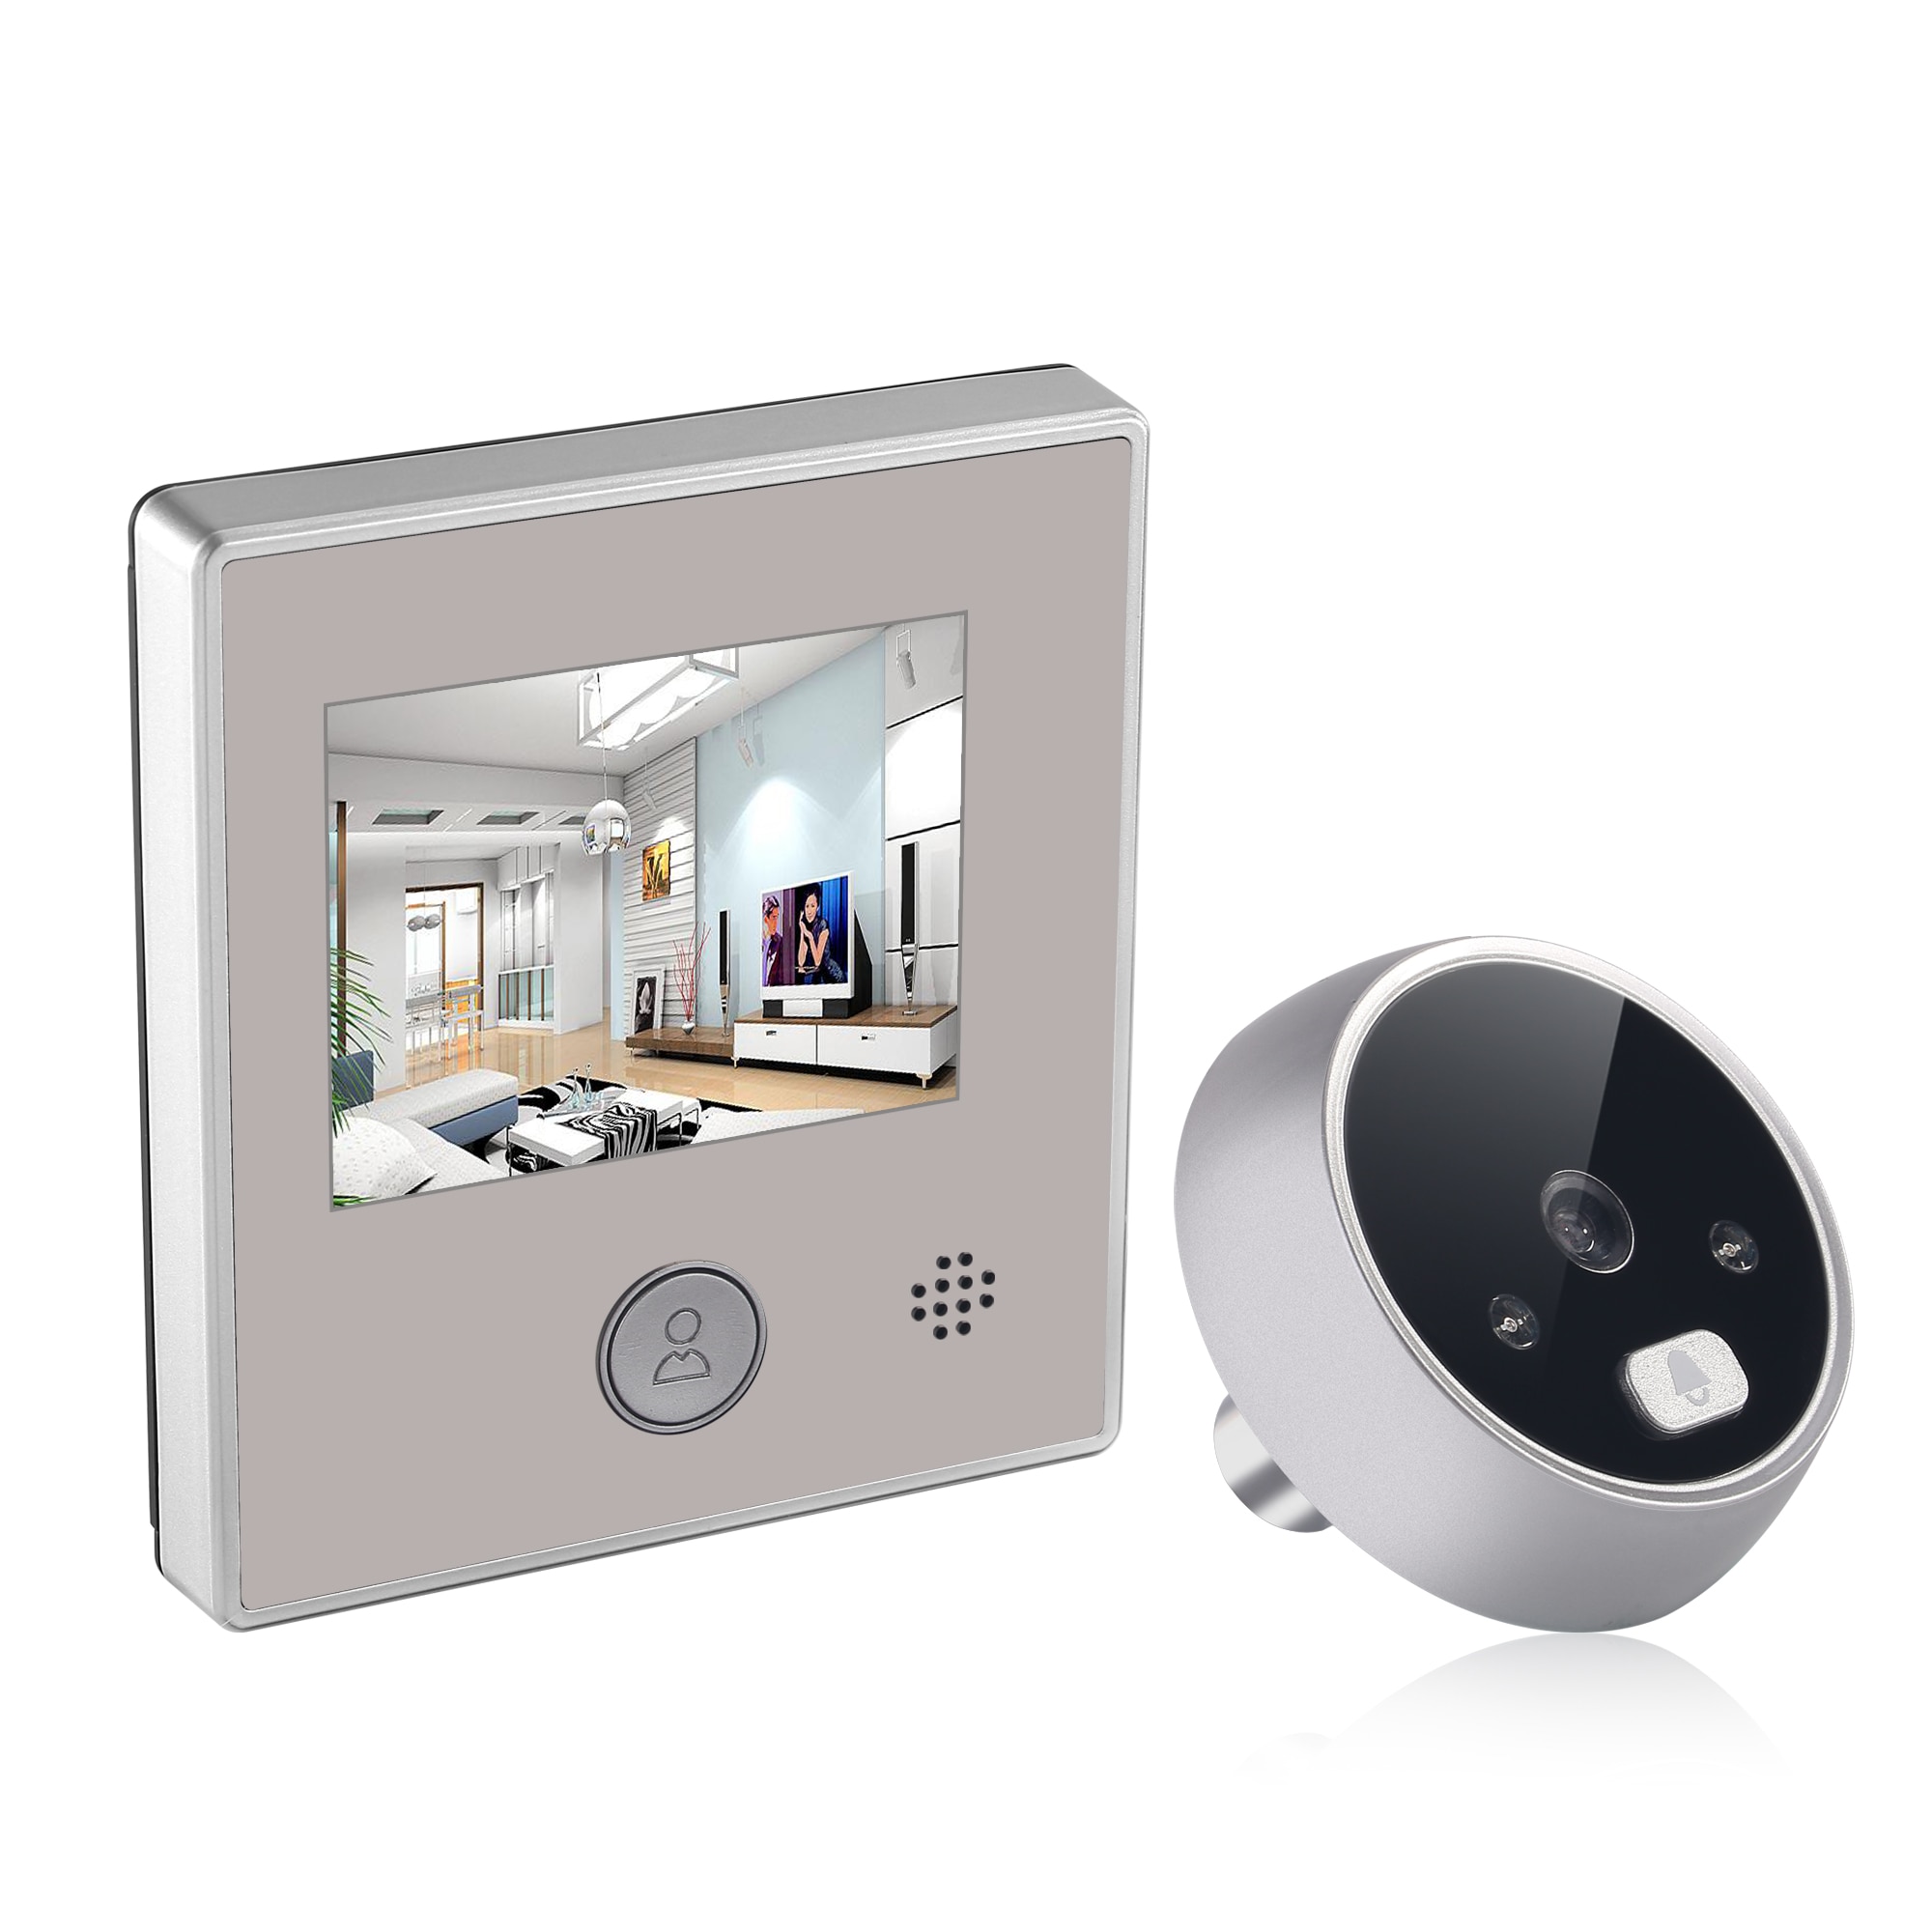 Smart elektronisk dørfremviser 2.8 "lcd-skærm digitalt dørkamera dørklokke visuelt kighulskamera fotooptagelse